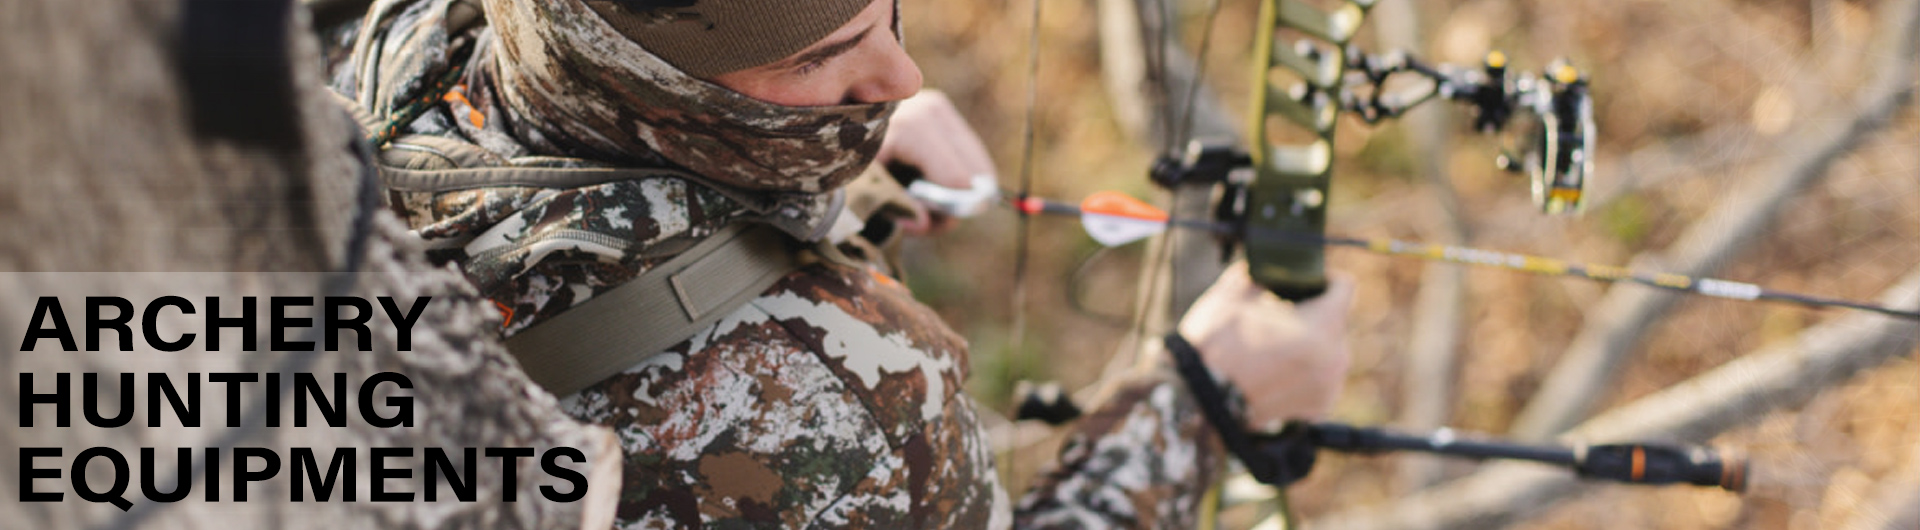 Archery Hunting Equipment Banner